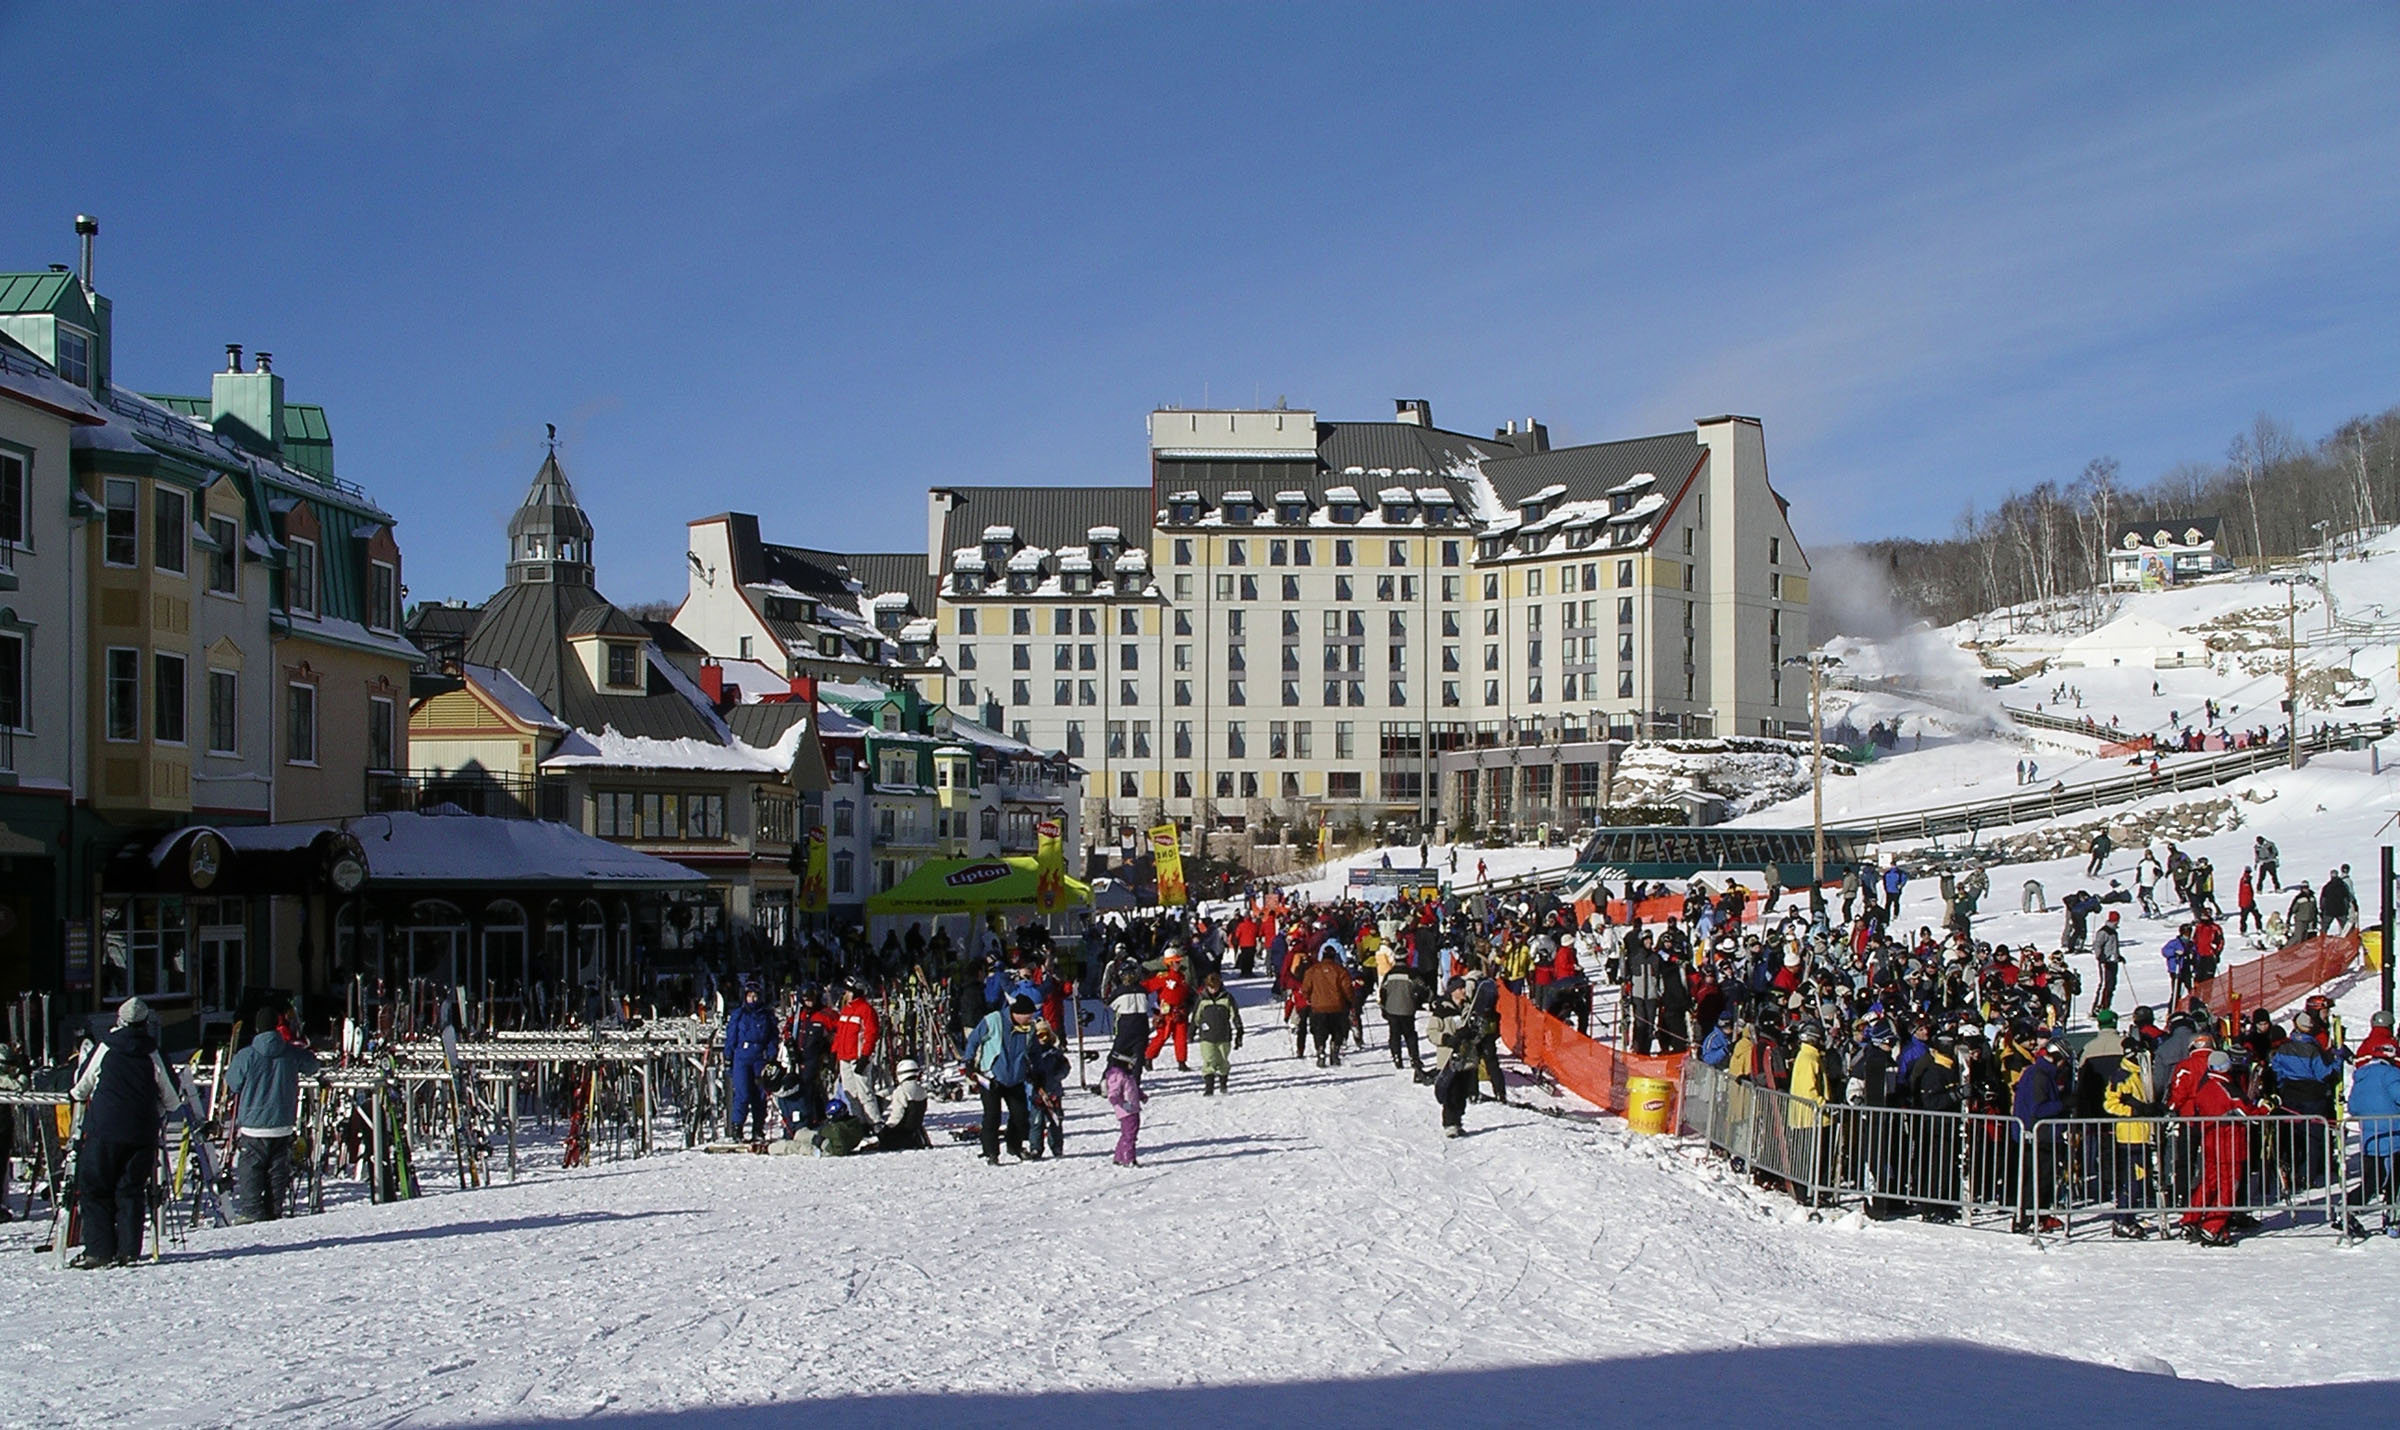 6 of the best luxury ski resorts